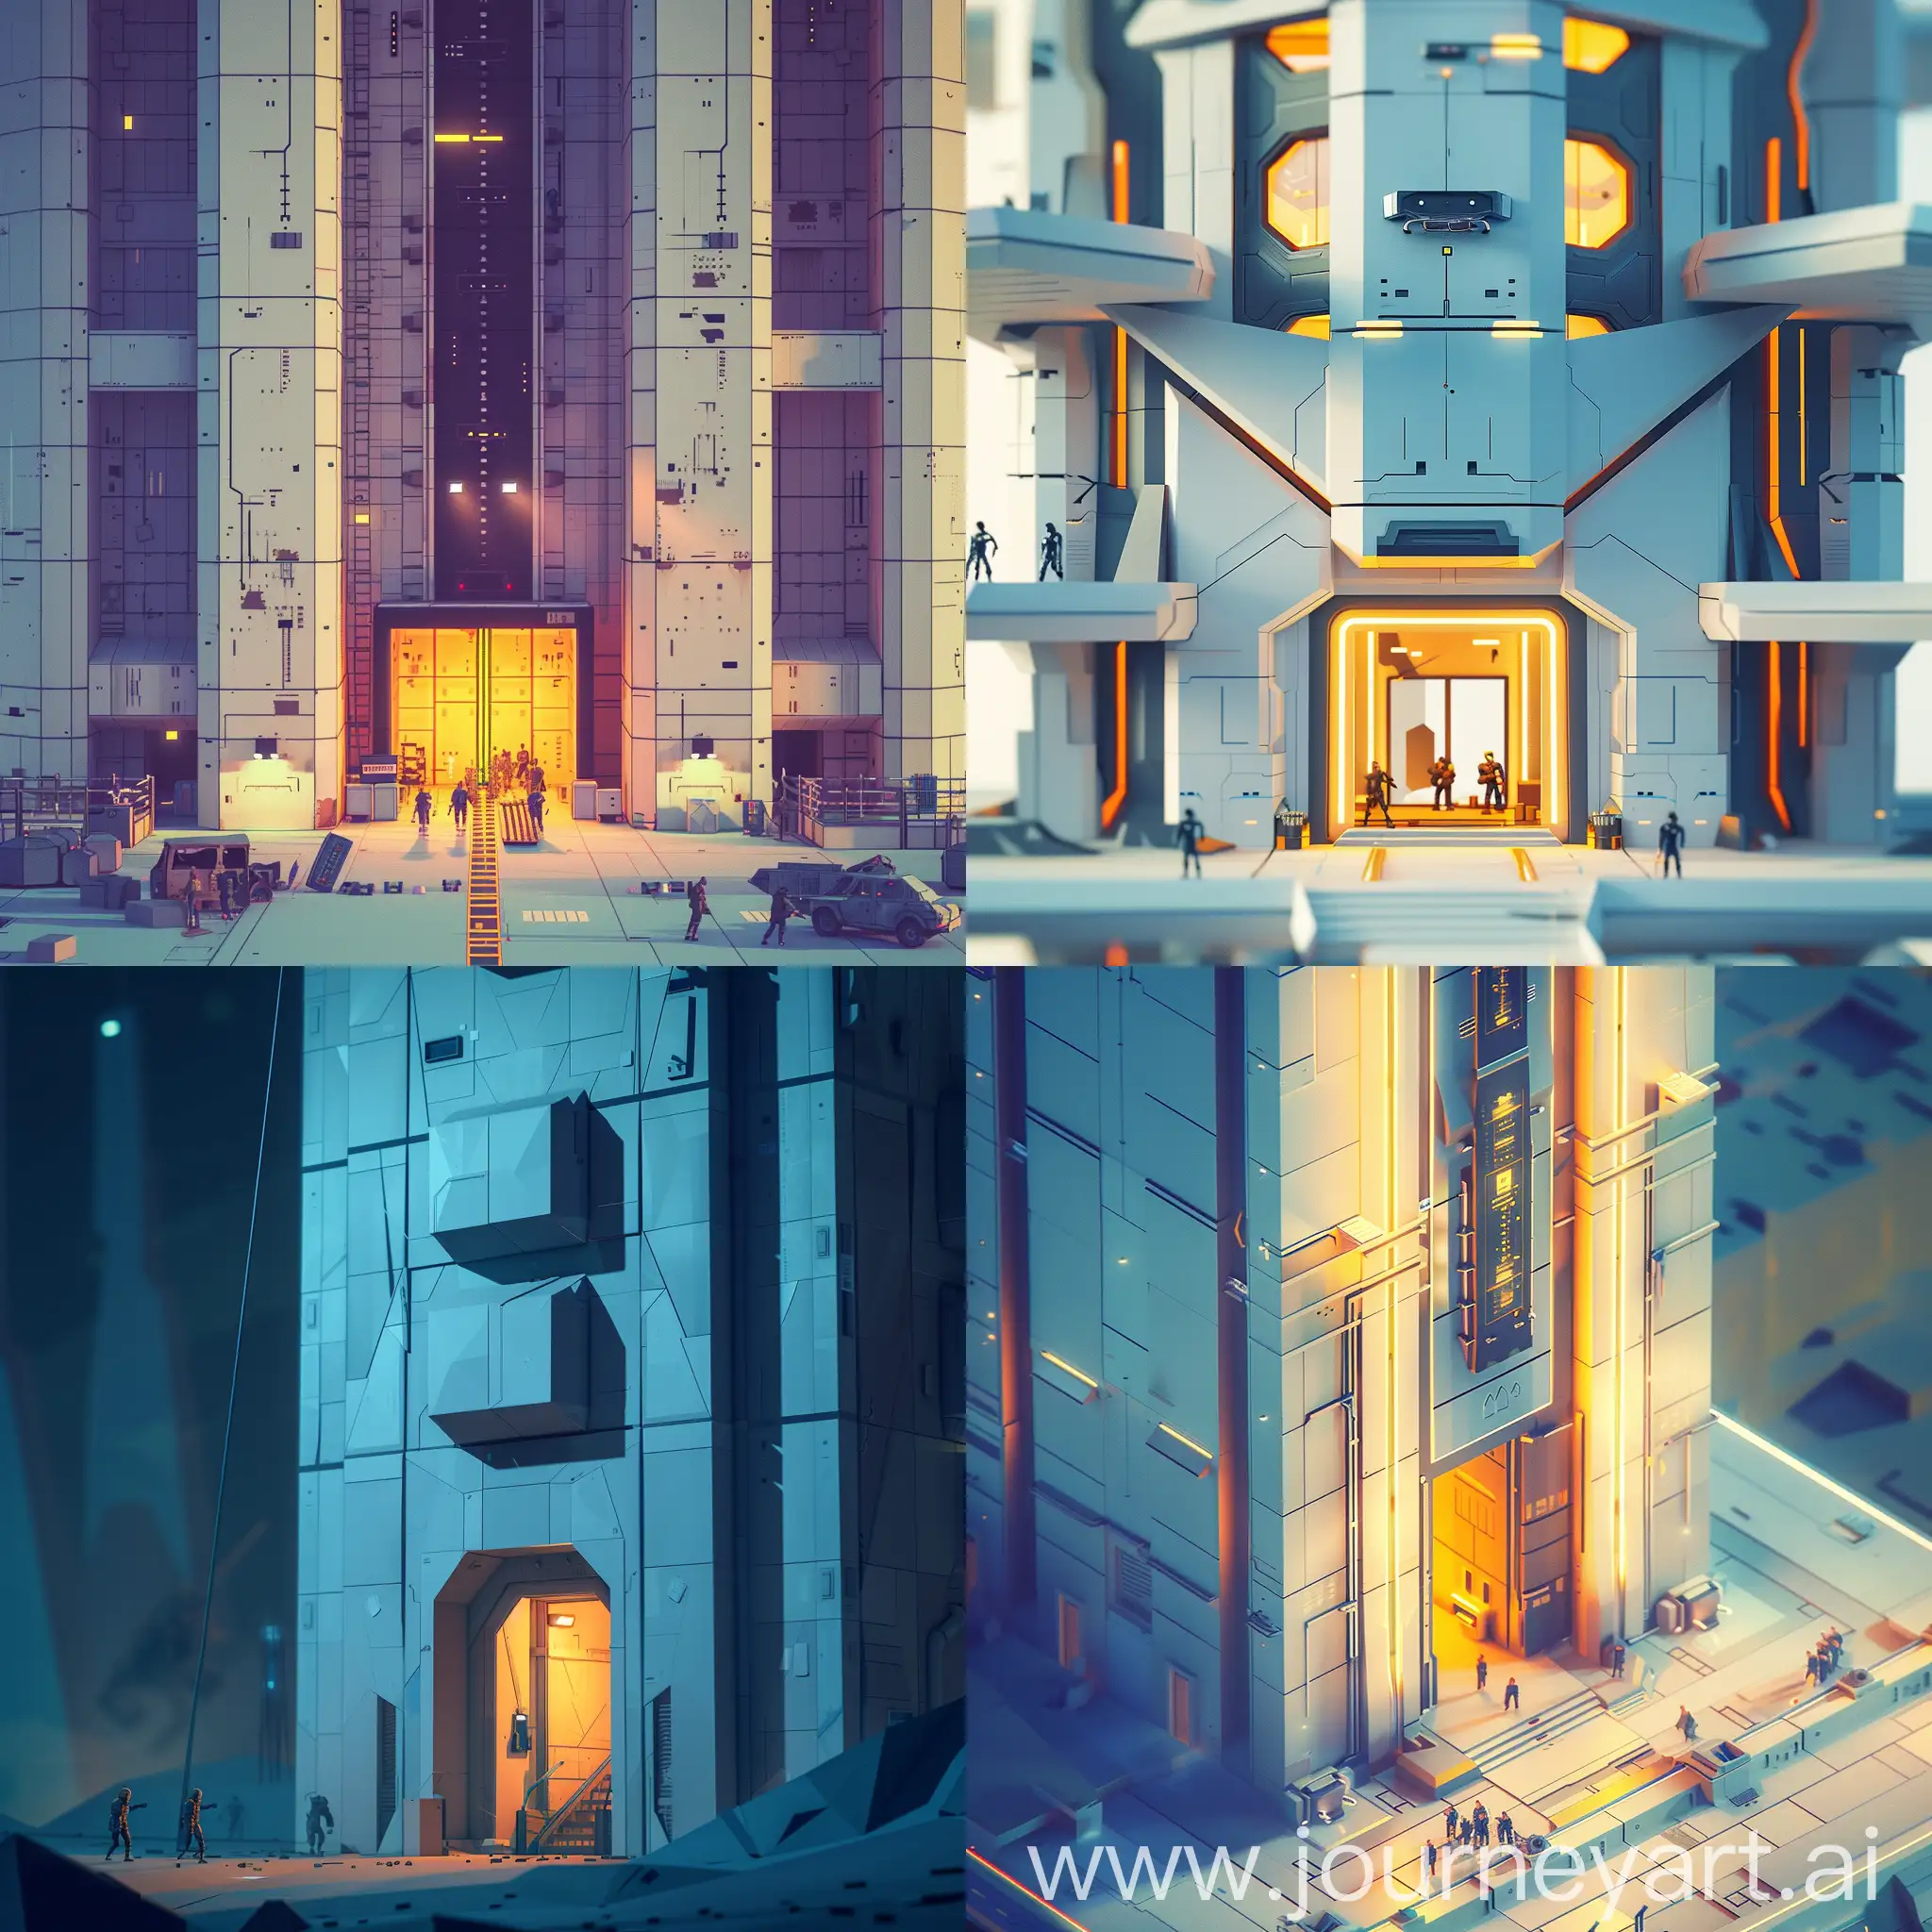 low-poly stylized sci-fi skyscraper modular building, abandoned, apocalypse, big door, zoomed in, people inside